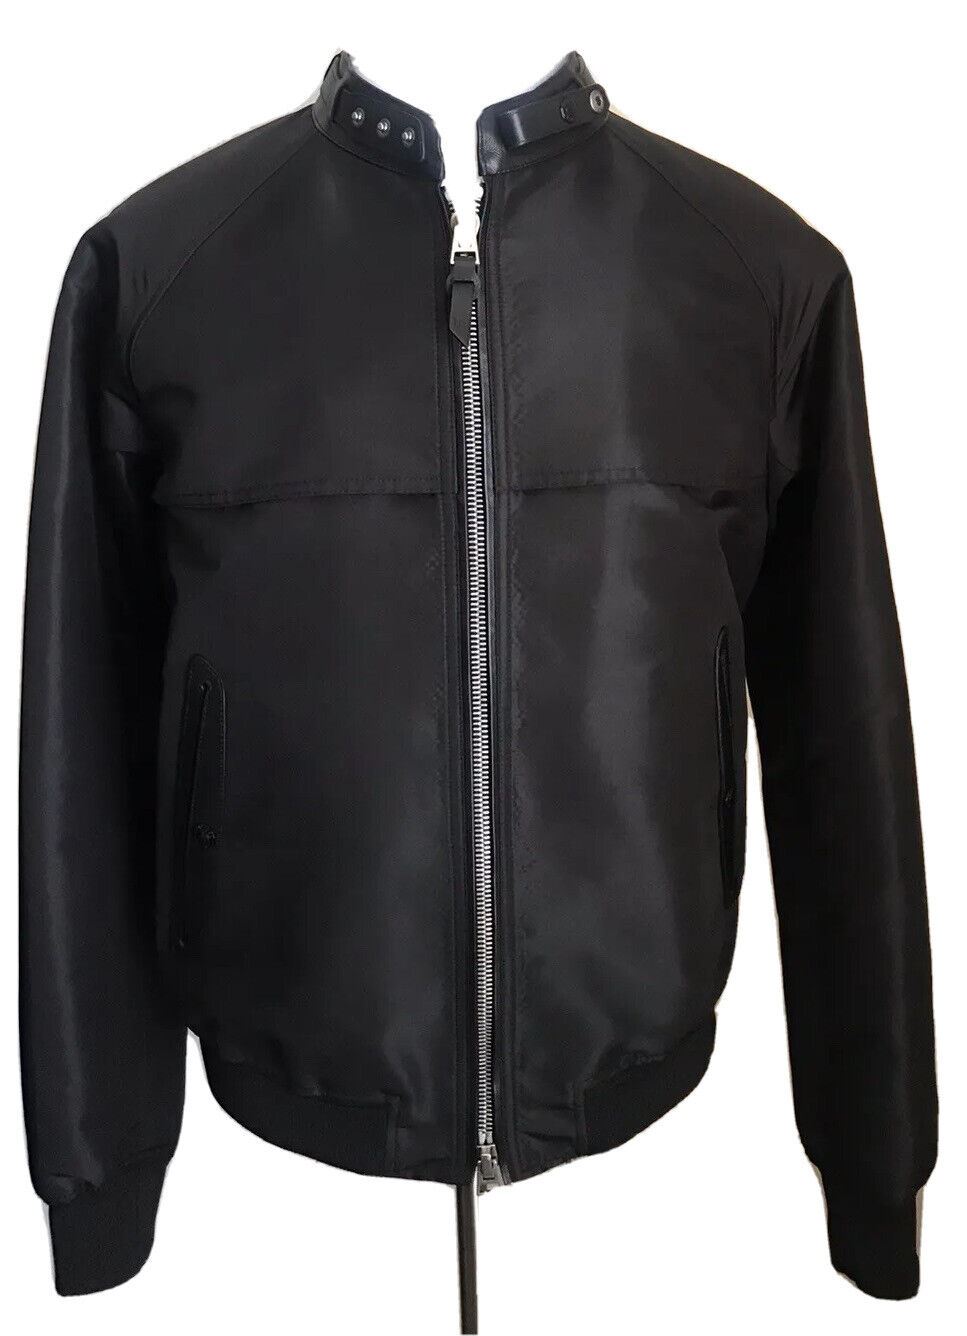 New 4190 TOM FORD Men’s Silk/Leather Blouson Zip Jacket Black 44 US/54 Eu